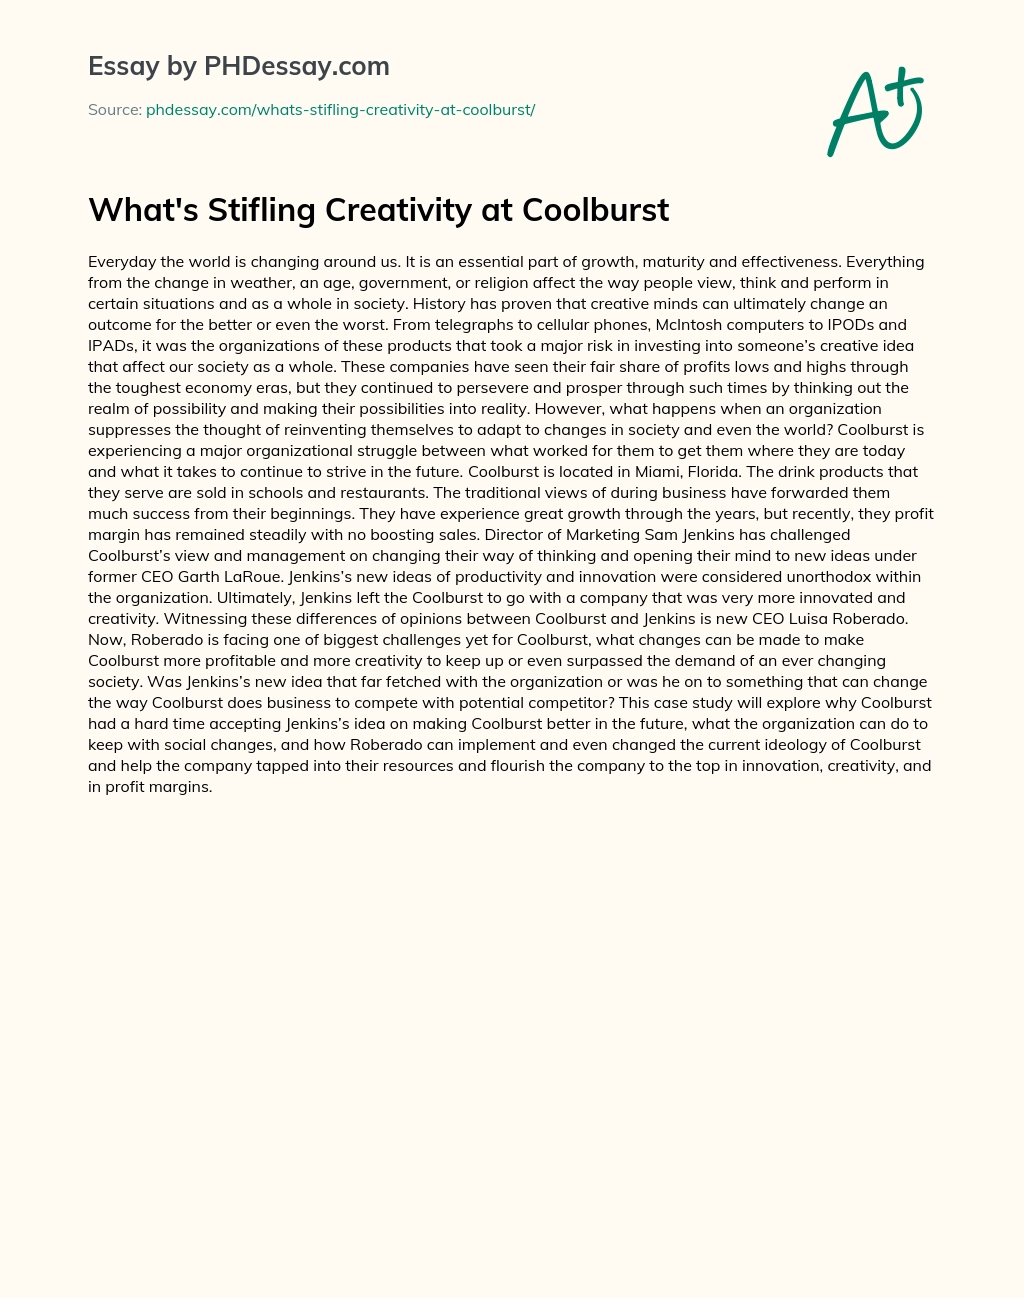 What’s Stifling Creativity at Coolburst essay